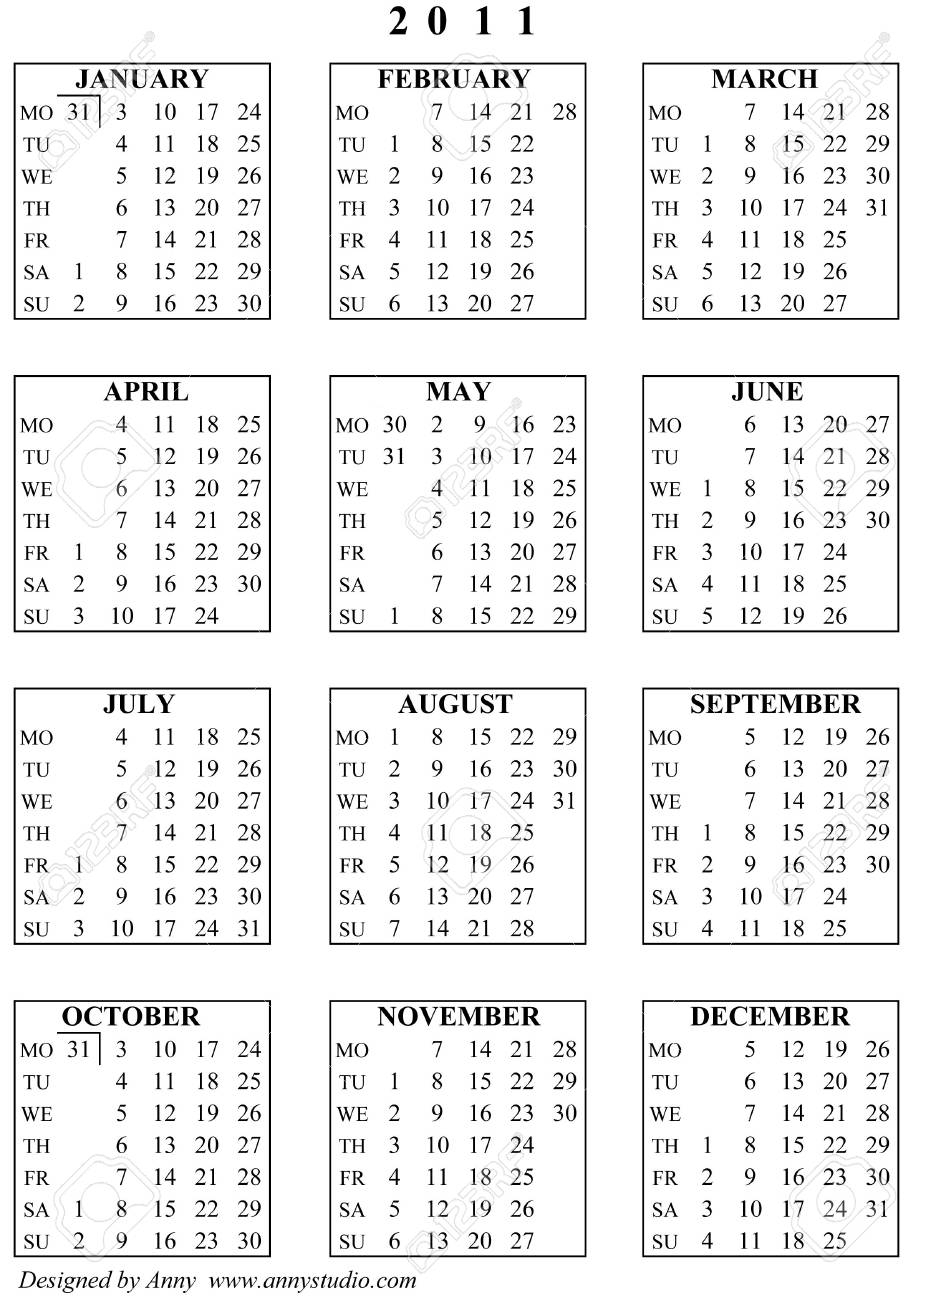 Calendar Year 2011